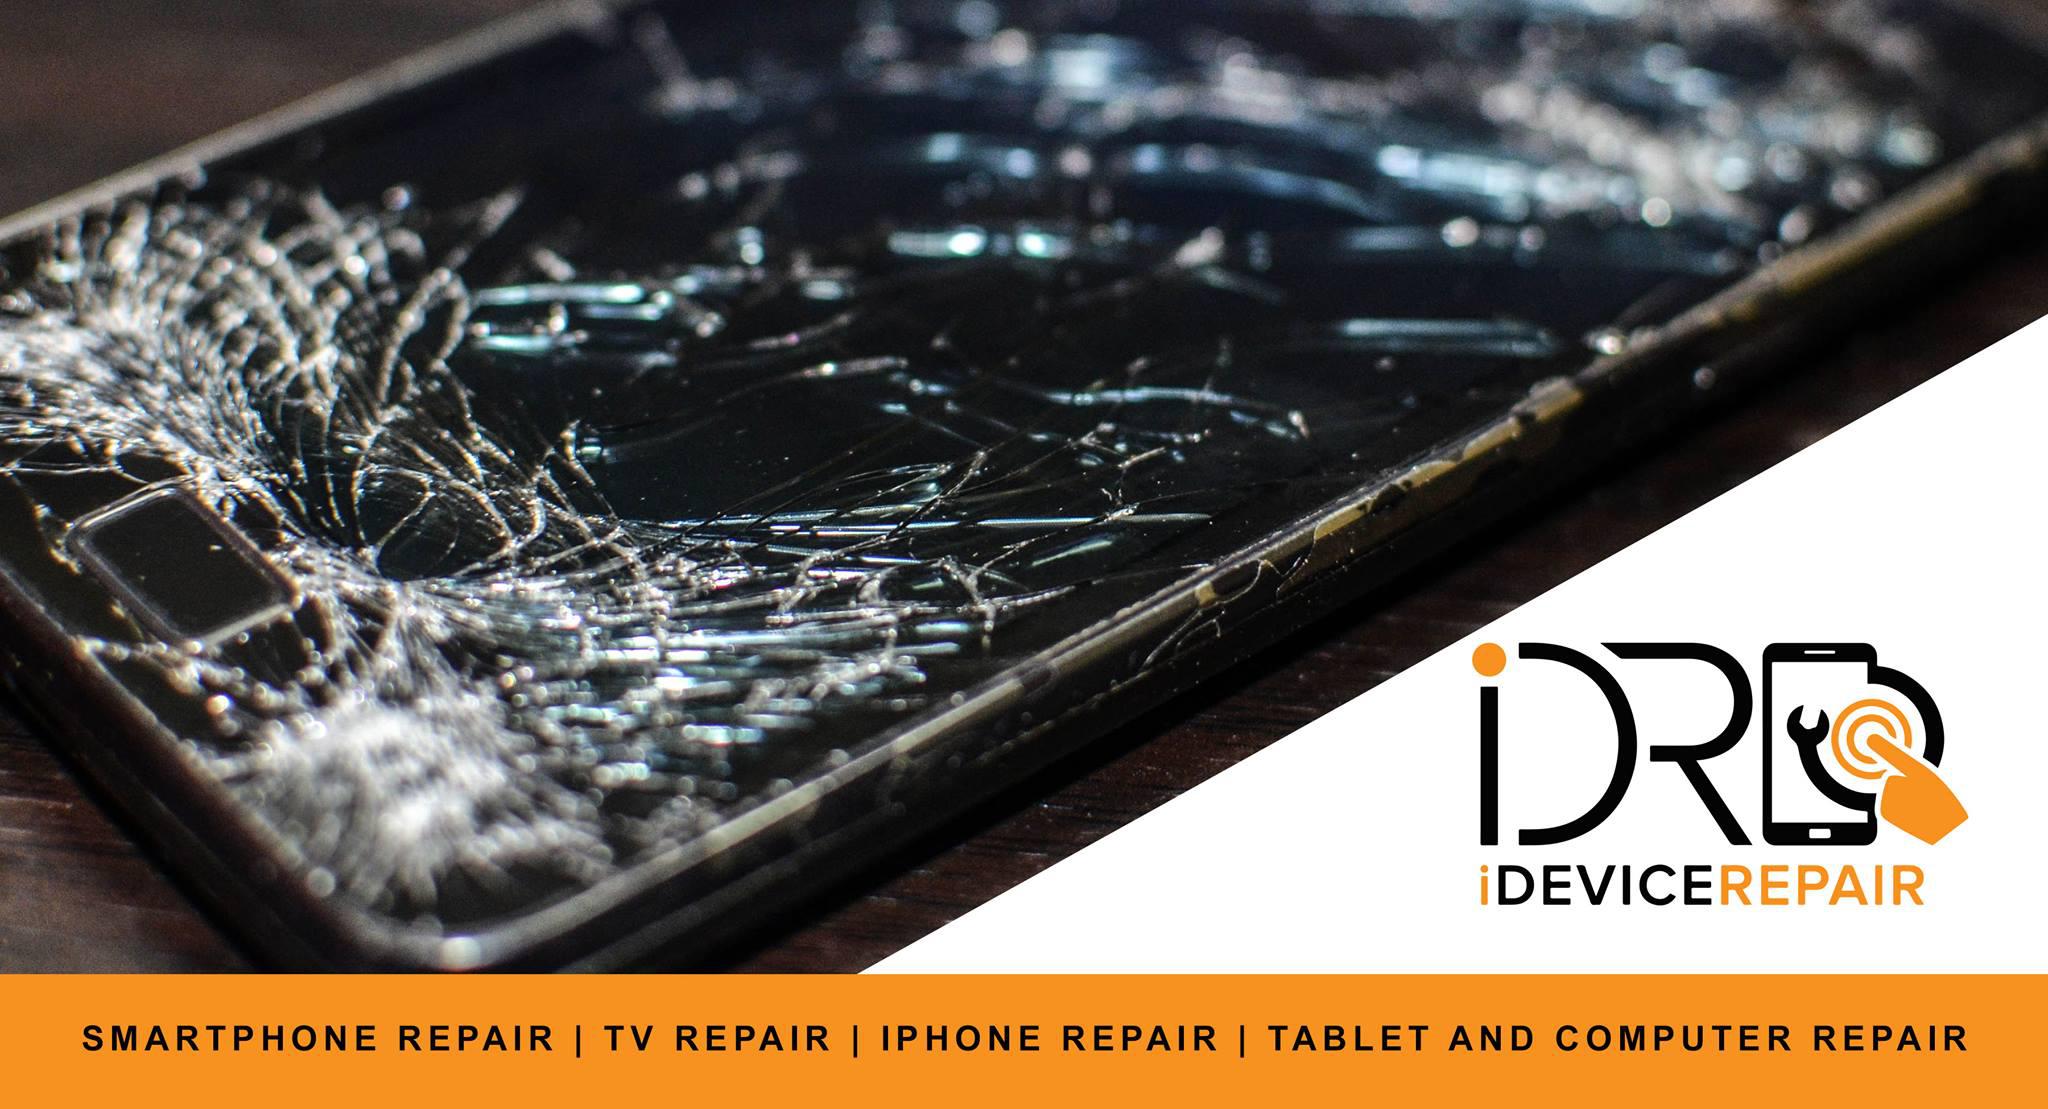 iDevice Repair - iPad iPhone Macbook TV Repair